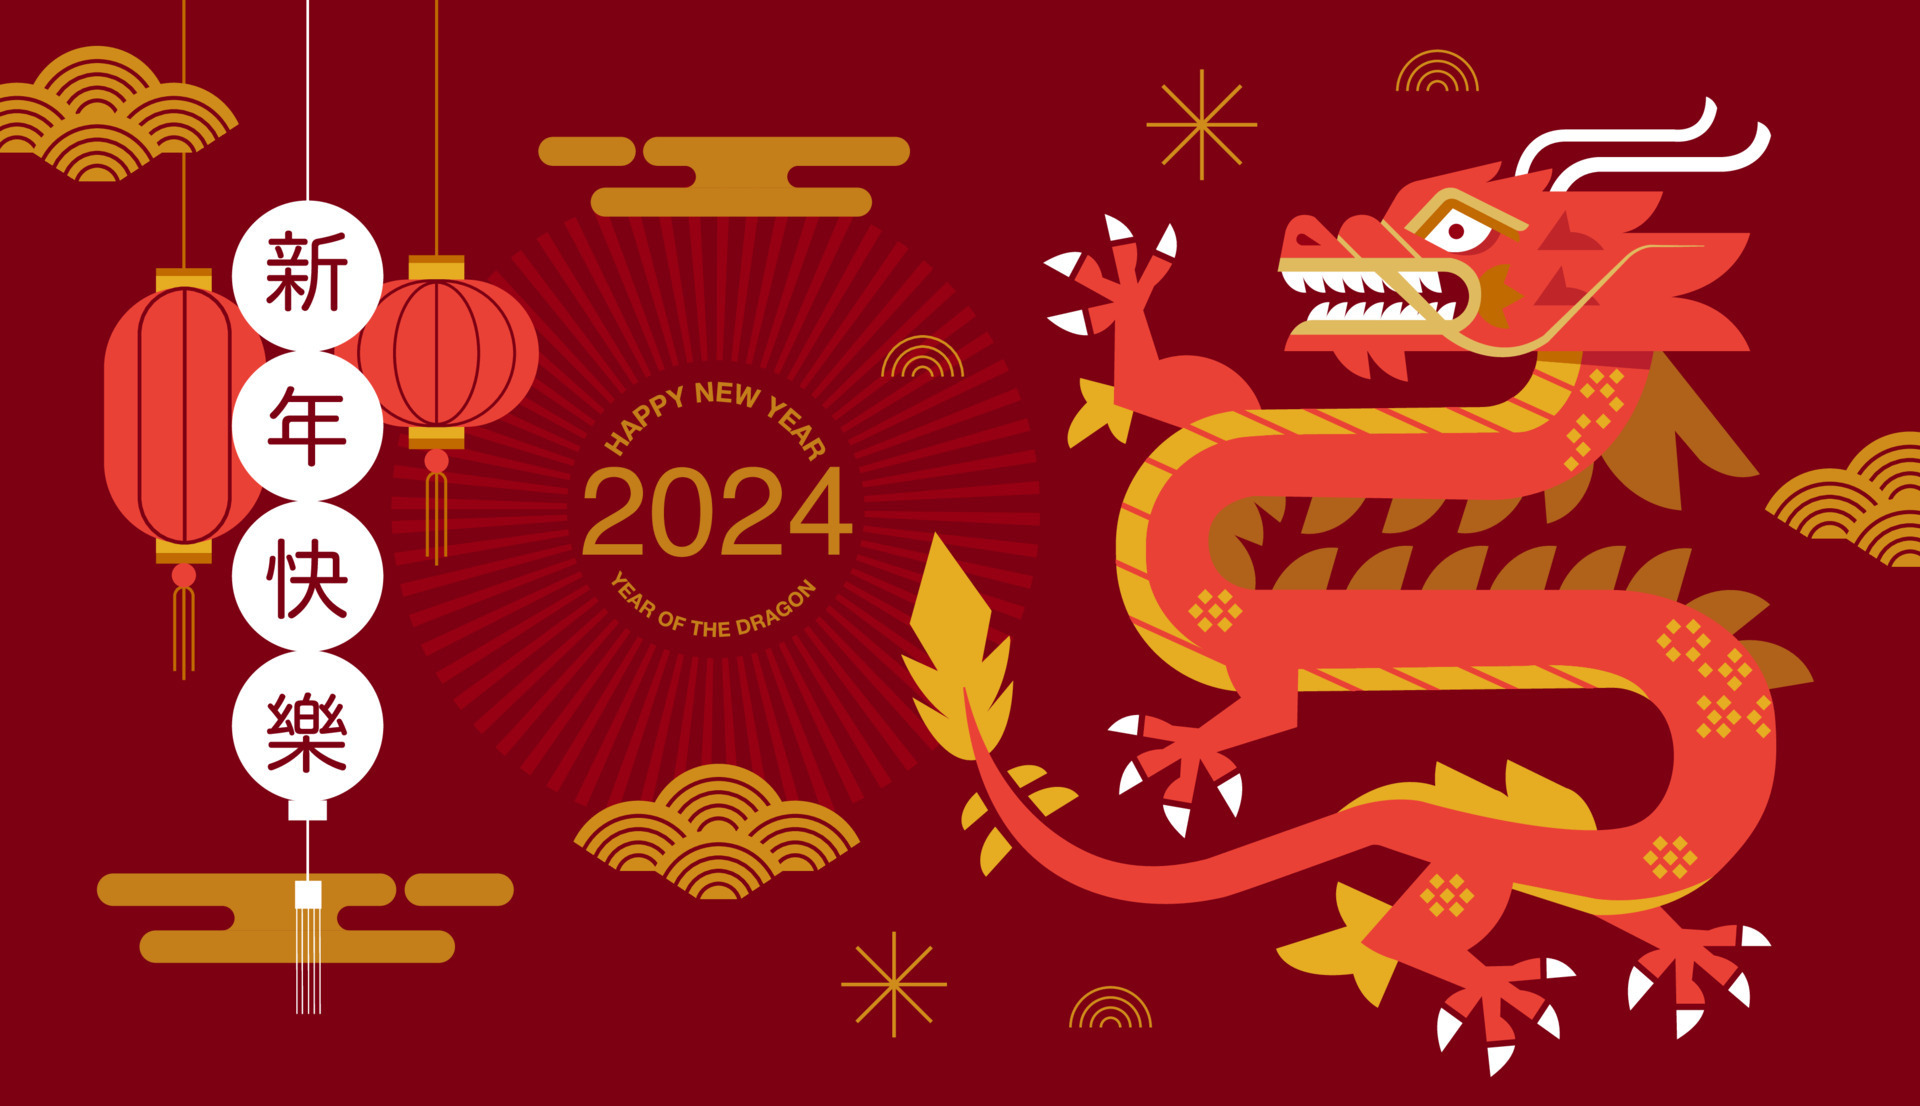 Lunar New Year Recipes 2024 Image to u